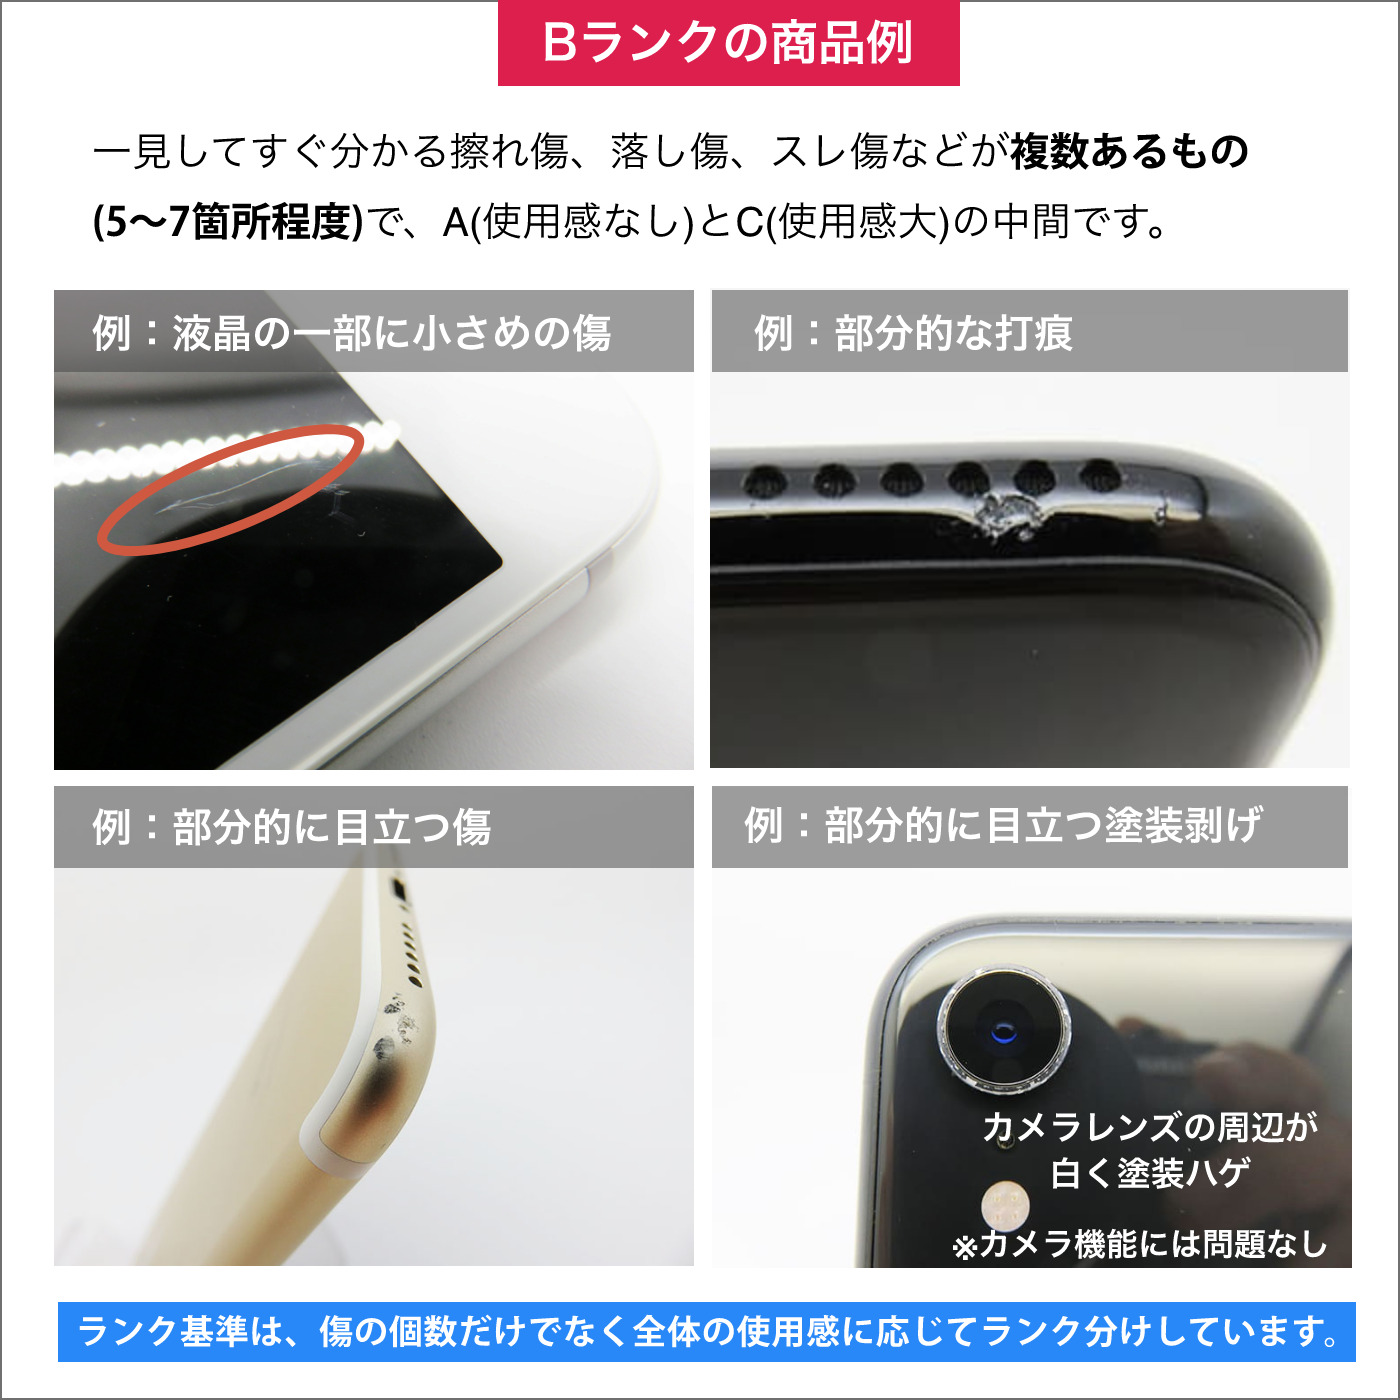 docomo iPad Air2 128GB ゴールド｜中古スマホ・中古携帯の激安販売ならダイワンテレコム